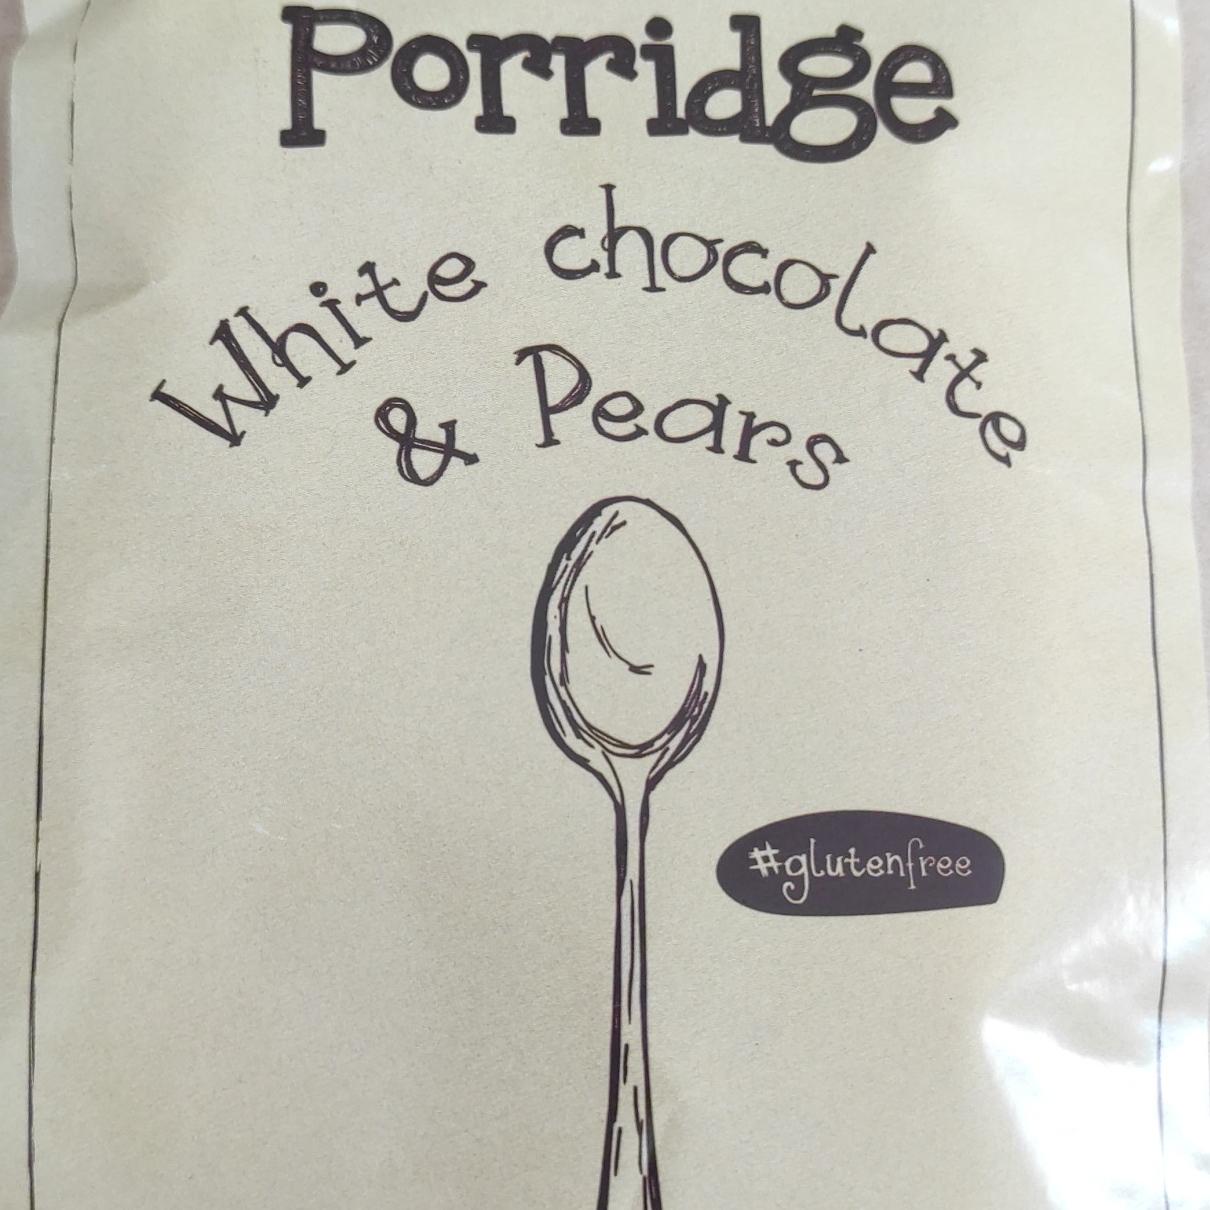 Fotografie - Porridge white chocolate & pears Goodie